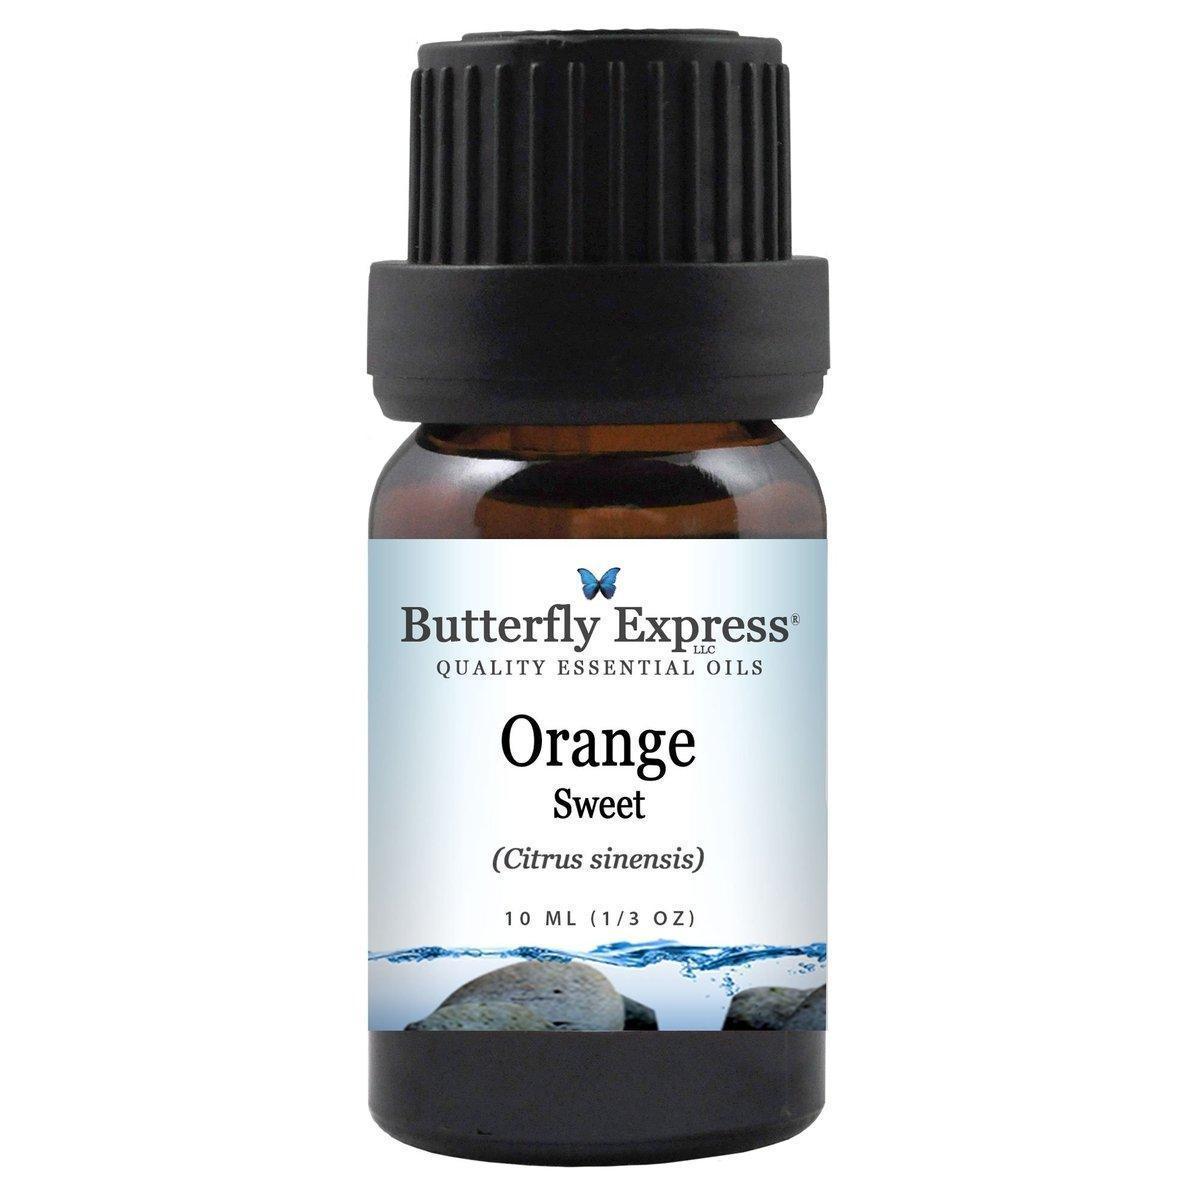 Orange Sweet essential oils